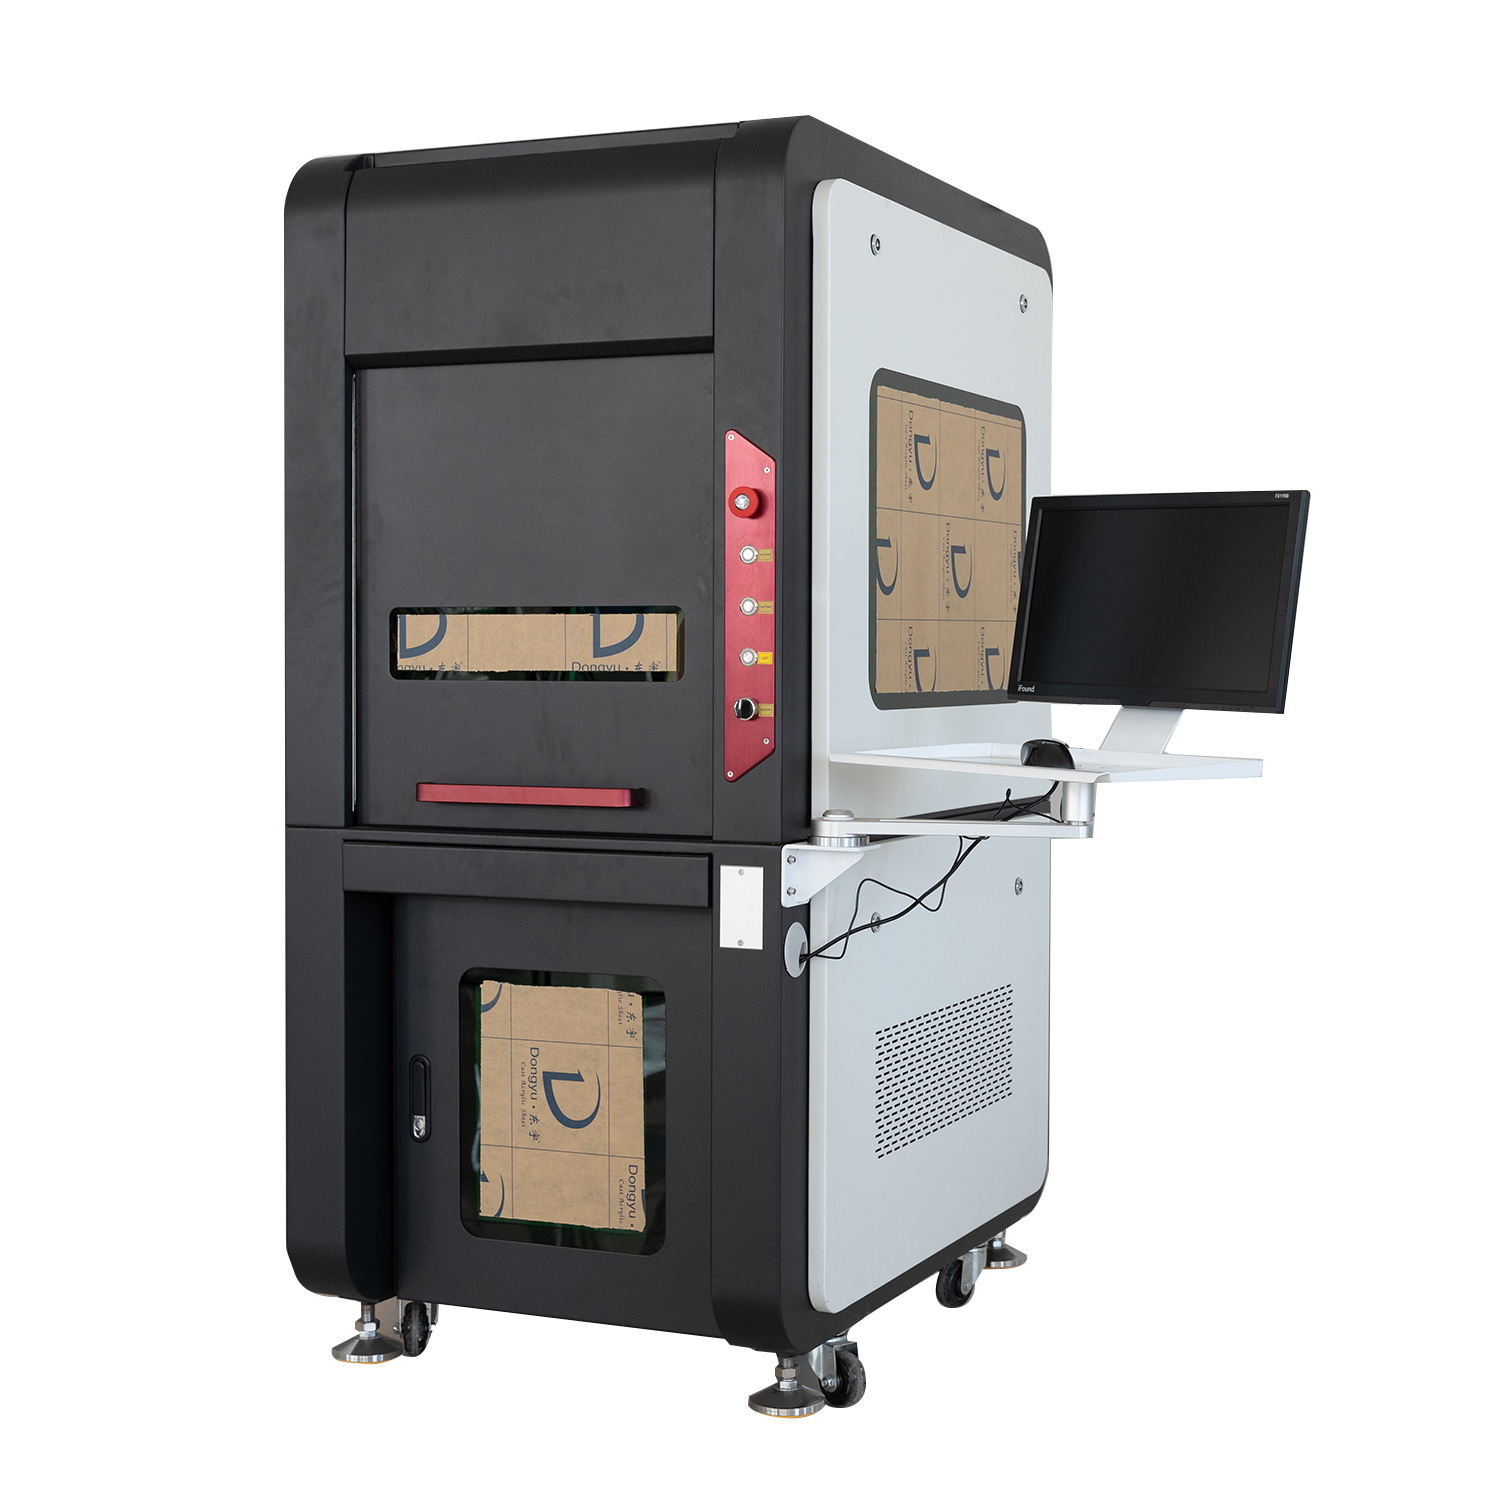 High quality laser Raycus / MAX / JPT laser source fiber laser marking machines 20w 30w 50w